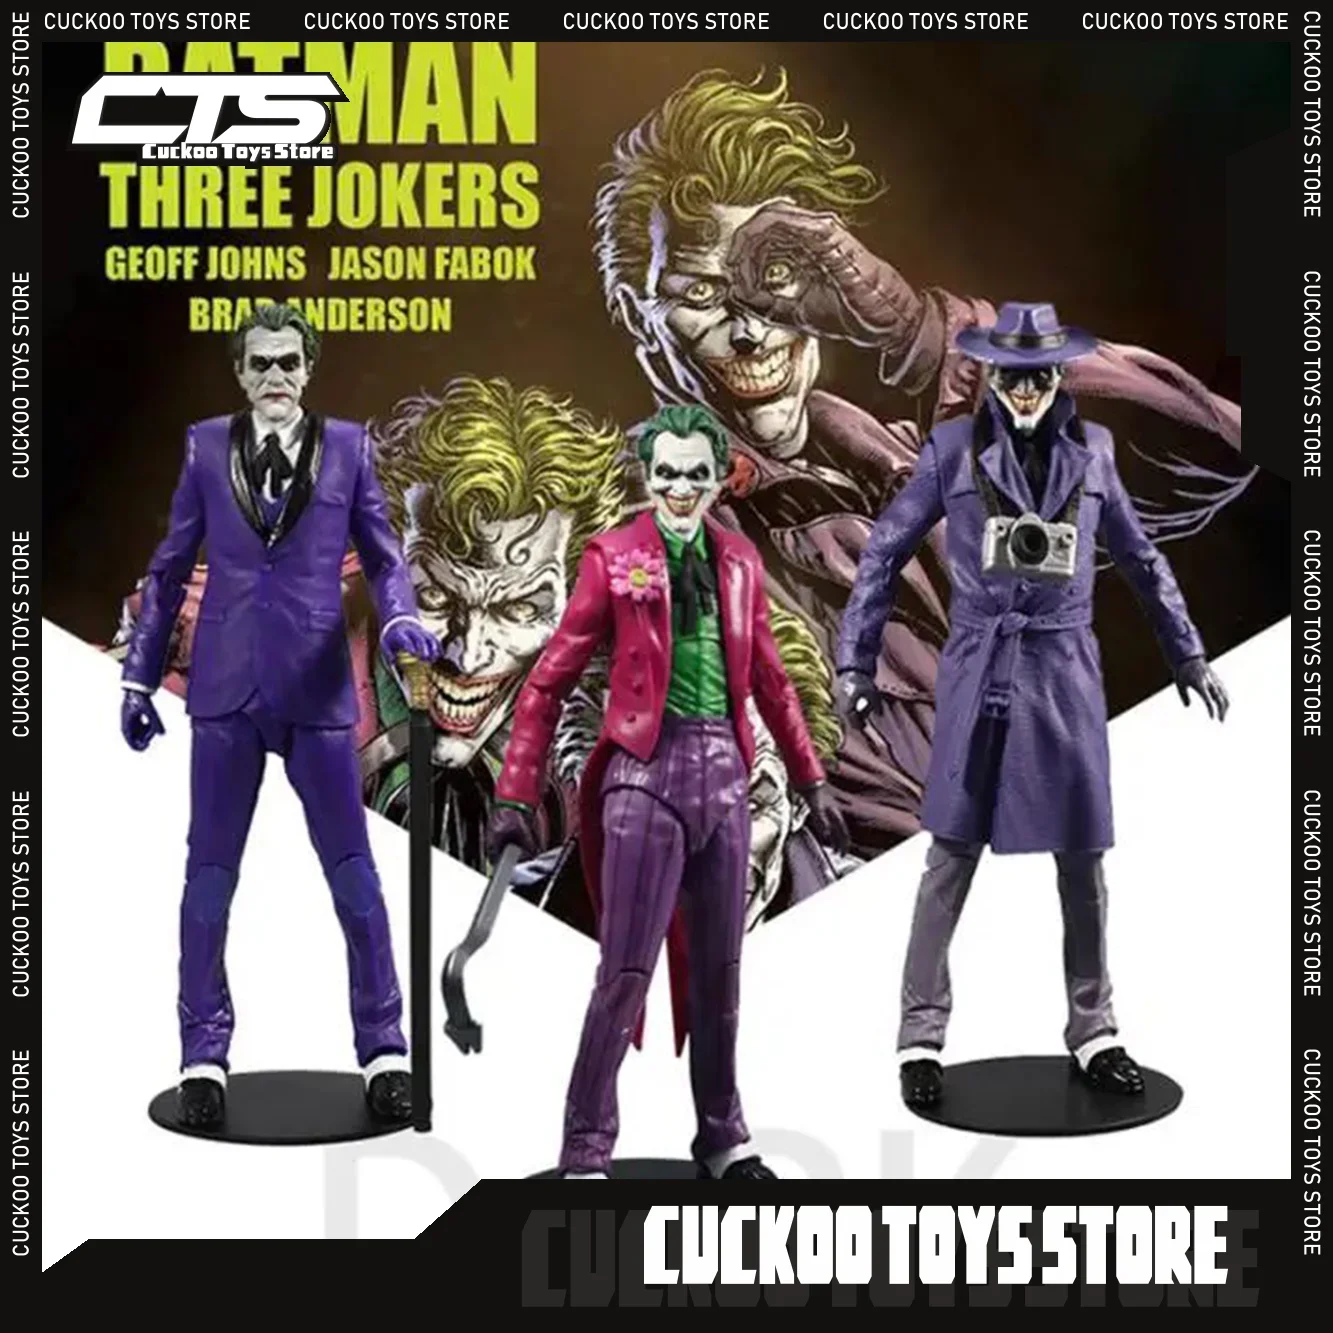  three jokers clown criminal comedian pvc gk statue figurine model doll collection room thumb200